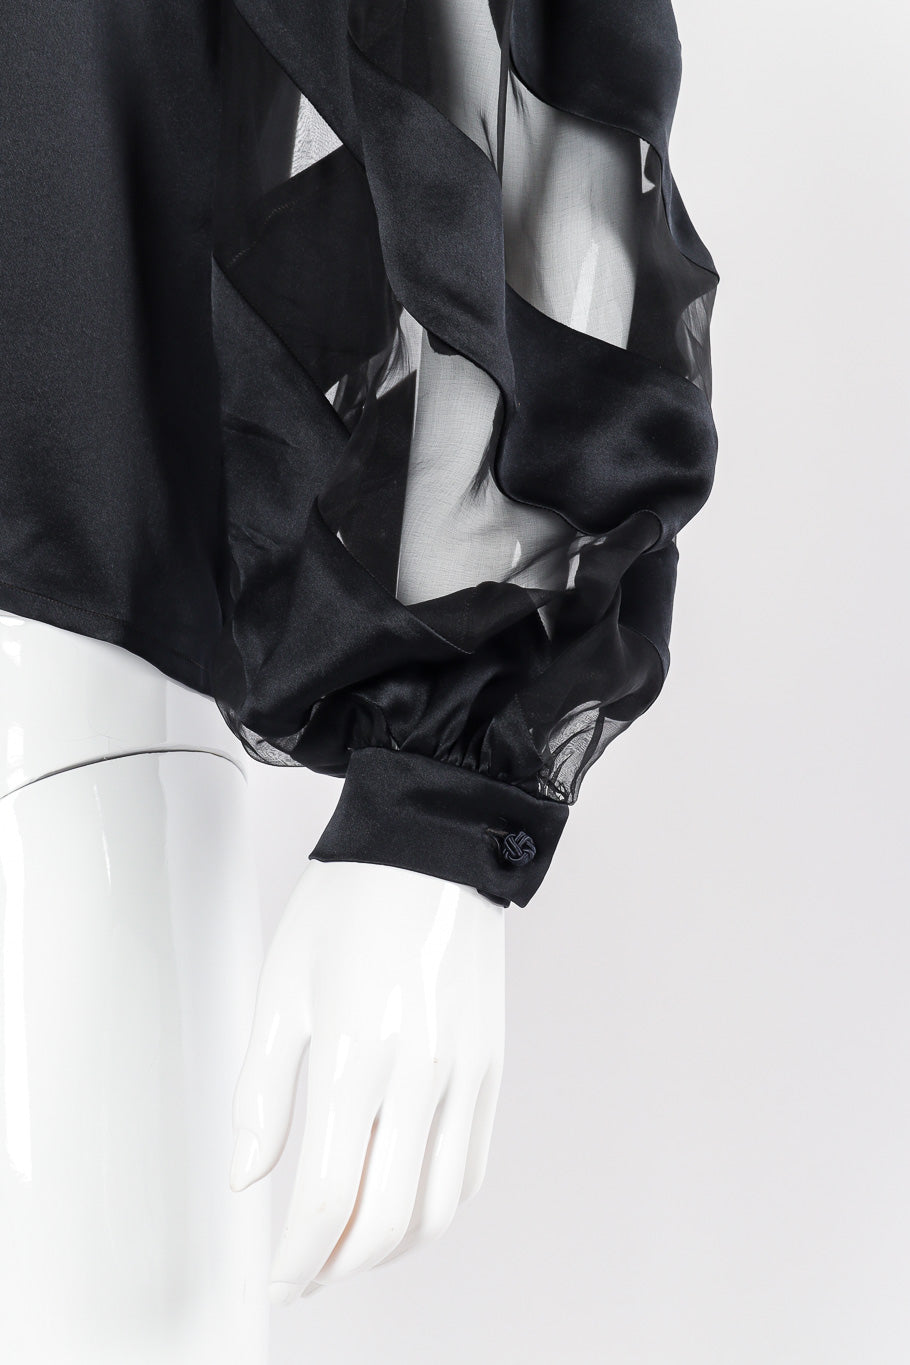 Ballon sleeve blouse by Valentino on mannequin sleeve close @recessla